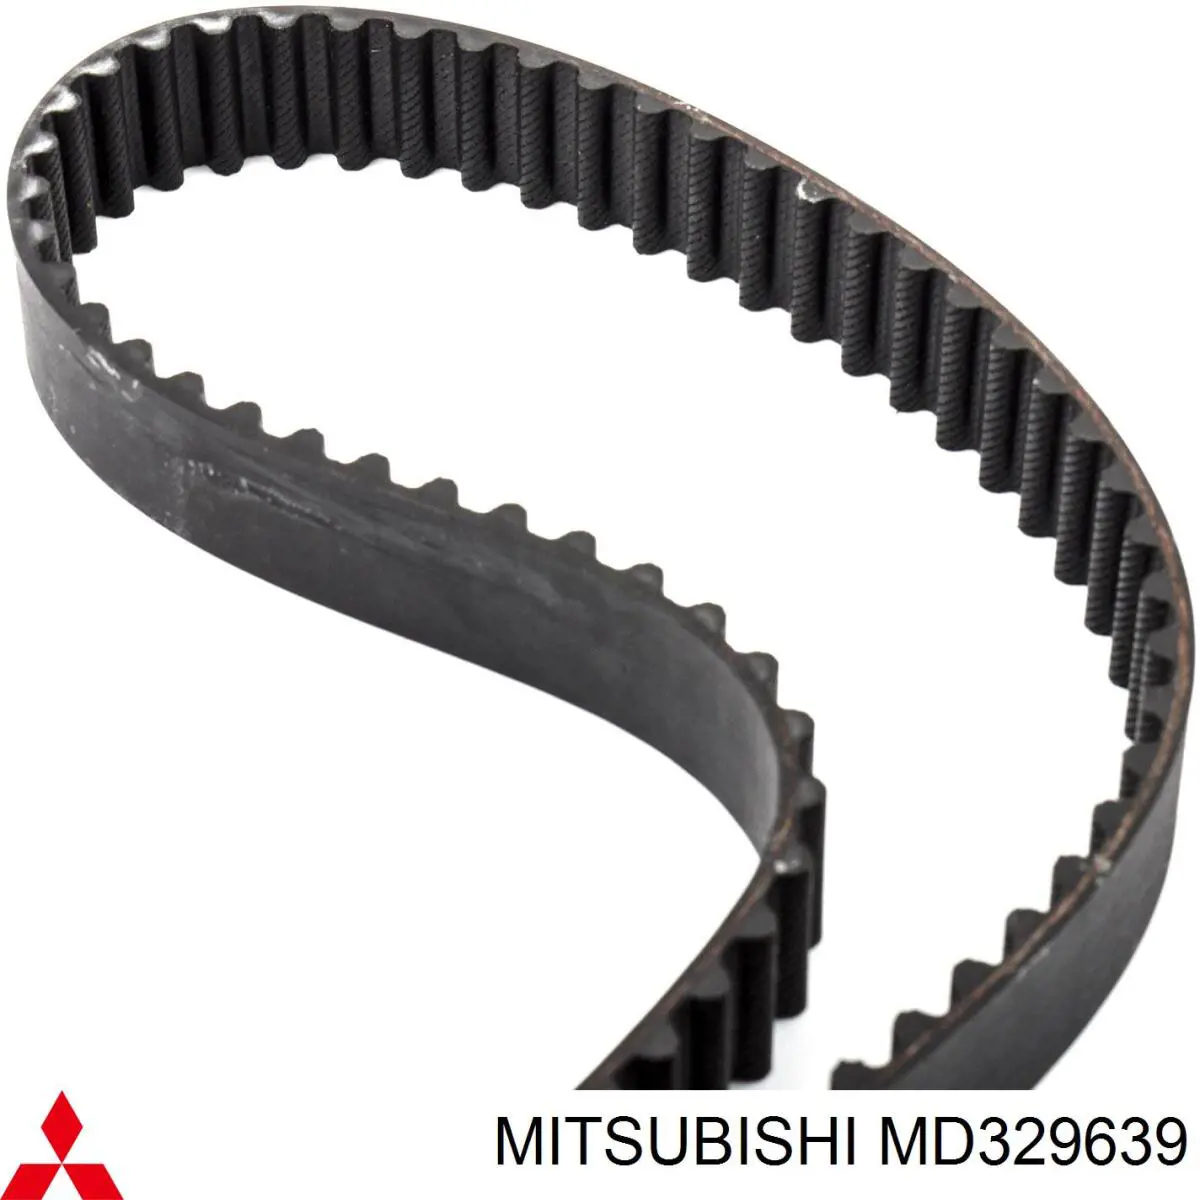 MD329639 Mitsubishi ремень грм